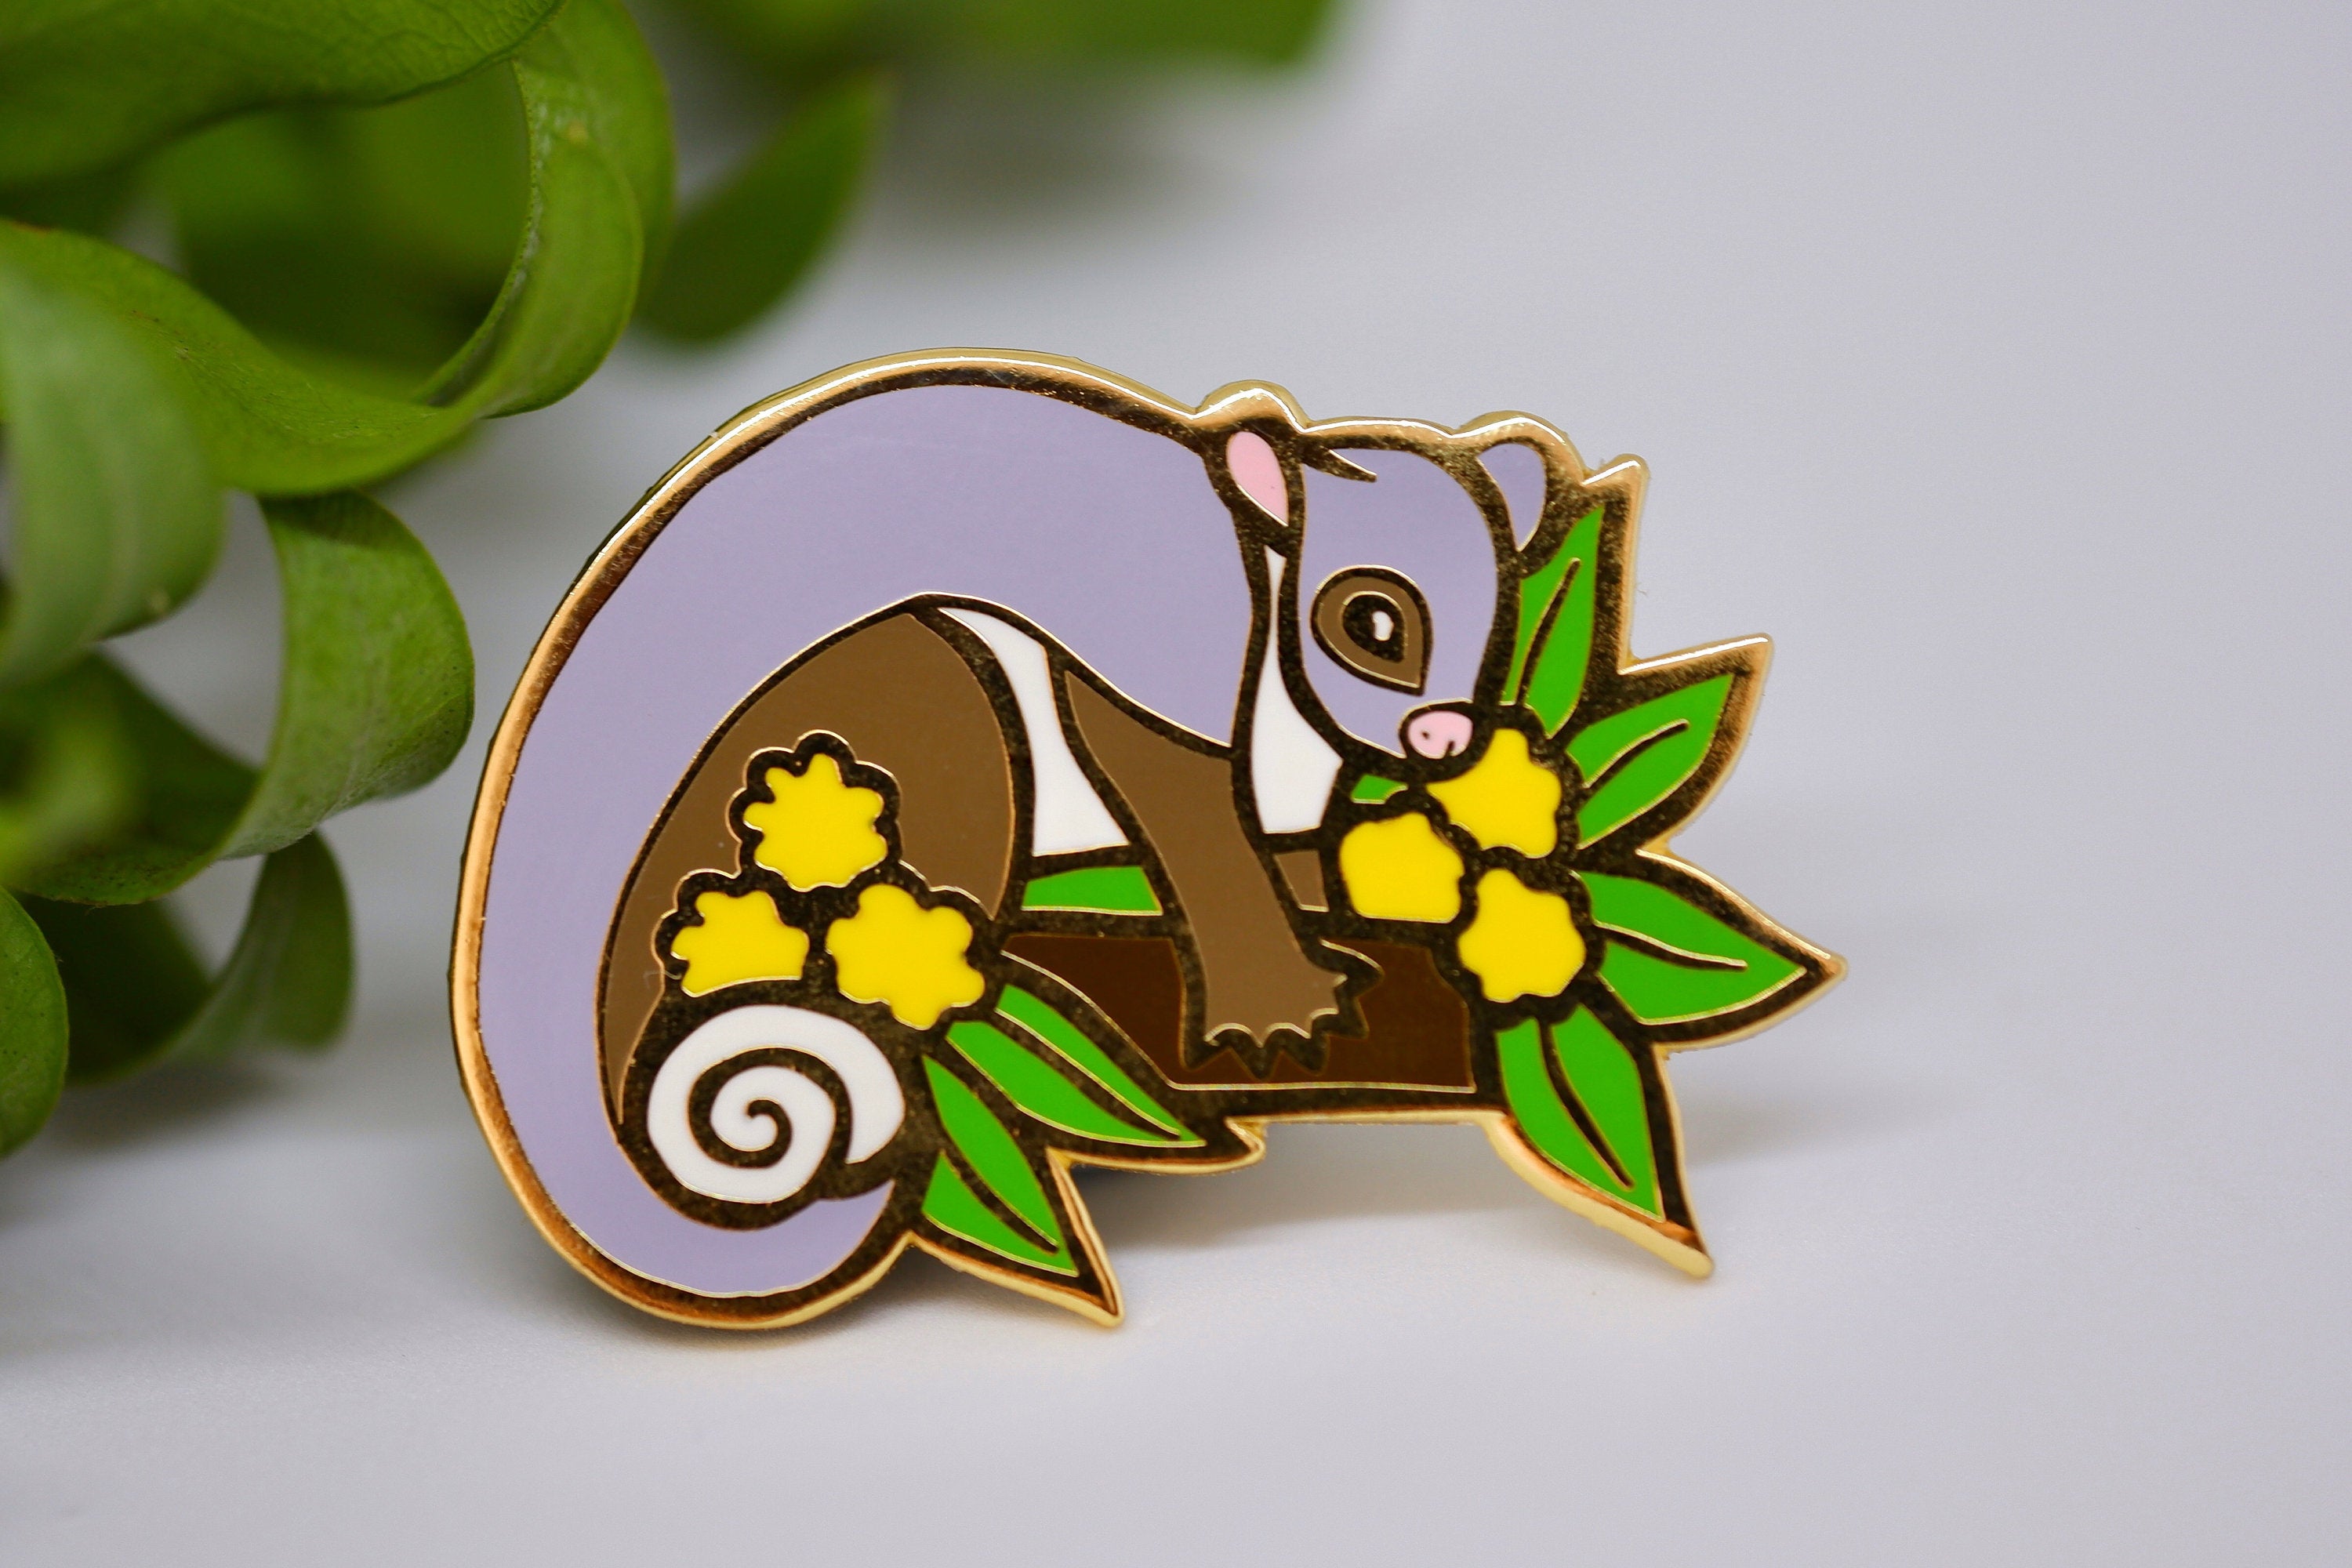 Ringtail Possum and Wattle Hard Enamel Pin - Australian Friends and Flowers - Aussie Animals - Lapel Pin, Cloissone Badge